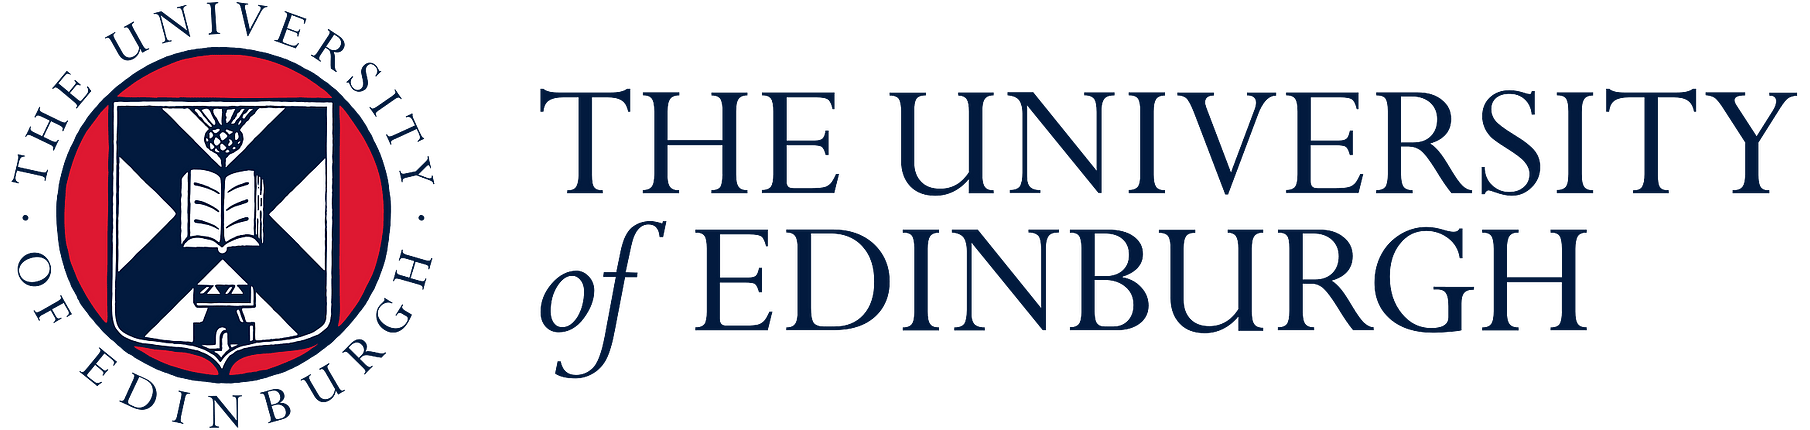 bellrock-coaching-university-of-edinburgh-logo.png